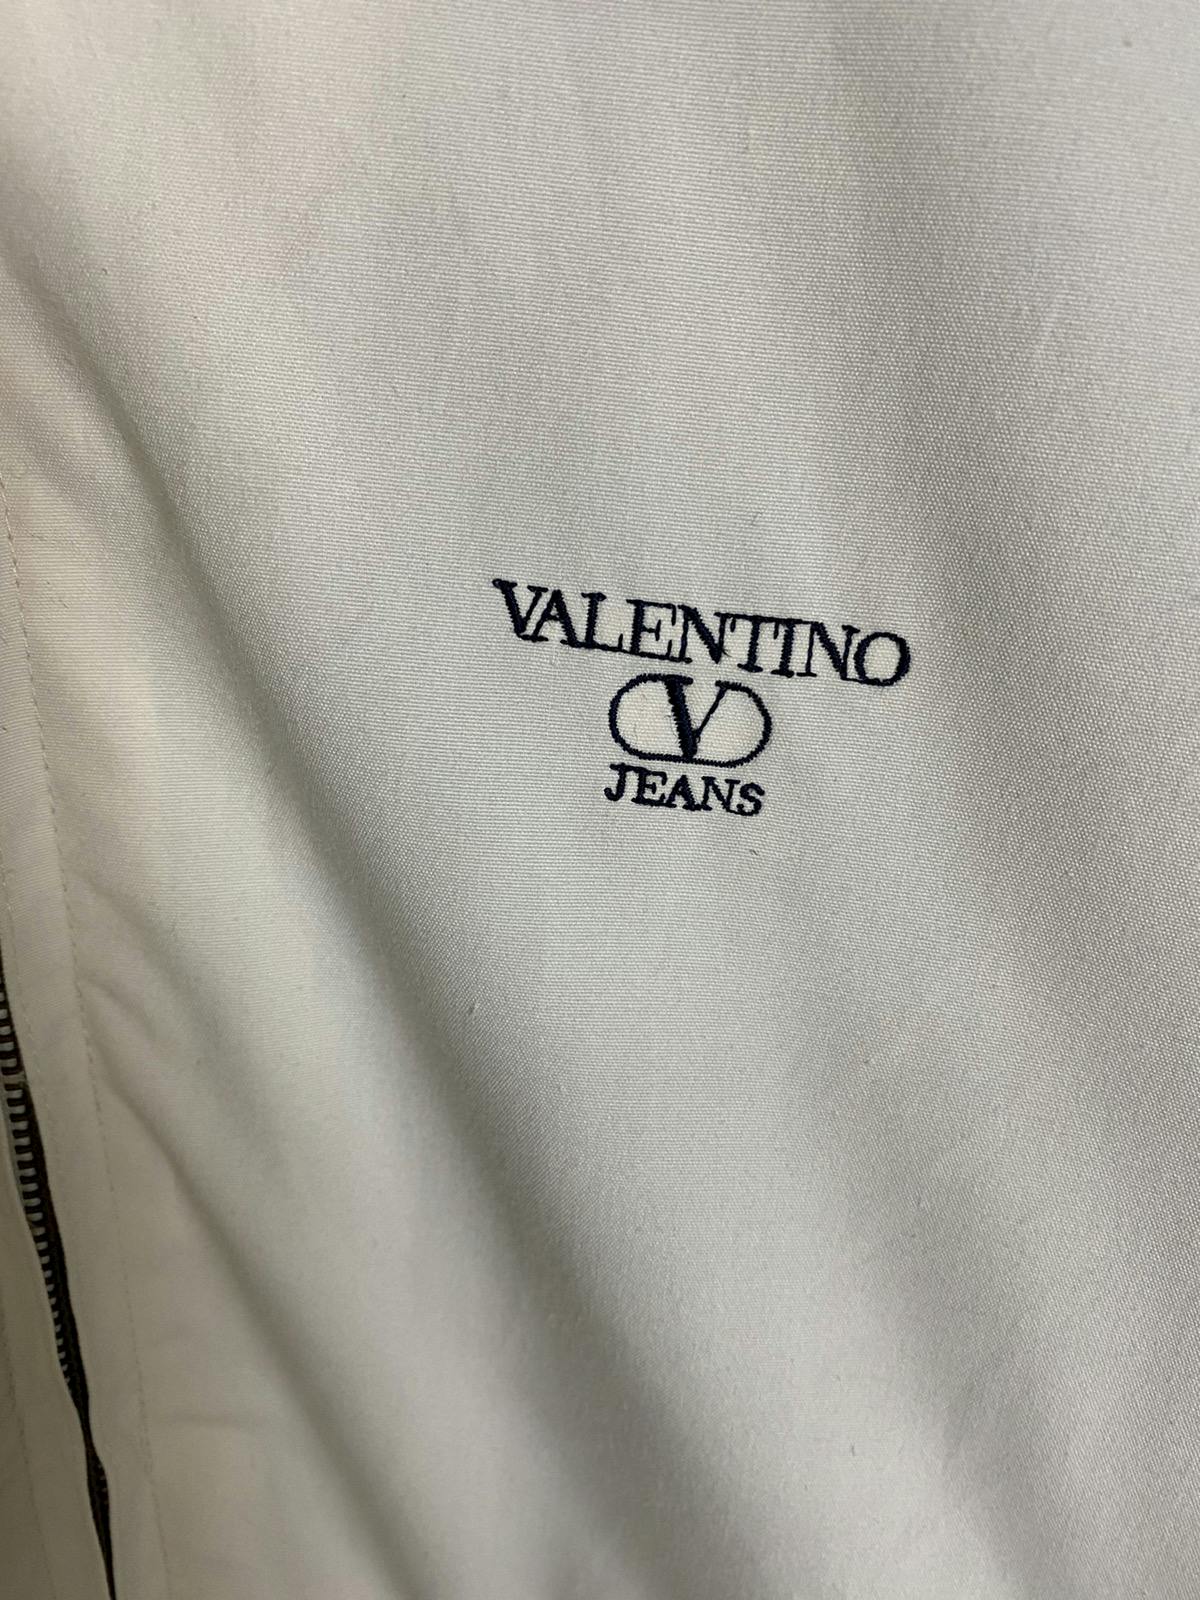 VALENTINO Jeans Spellout Harrington Jacket - 6